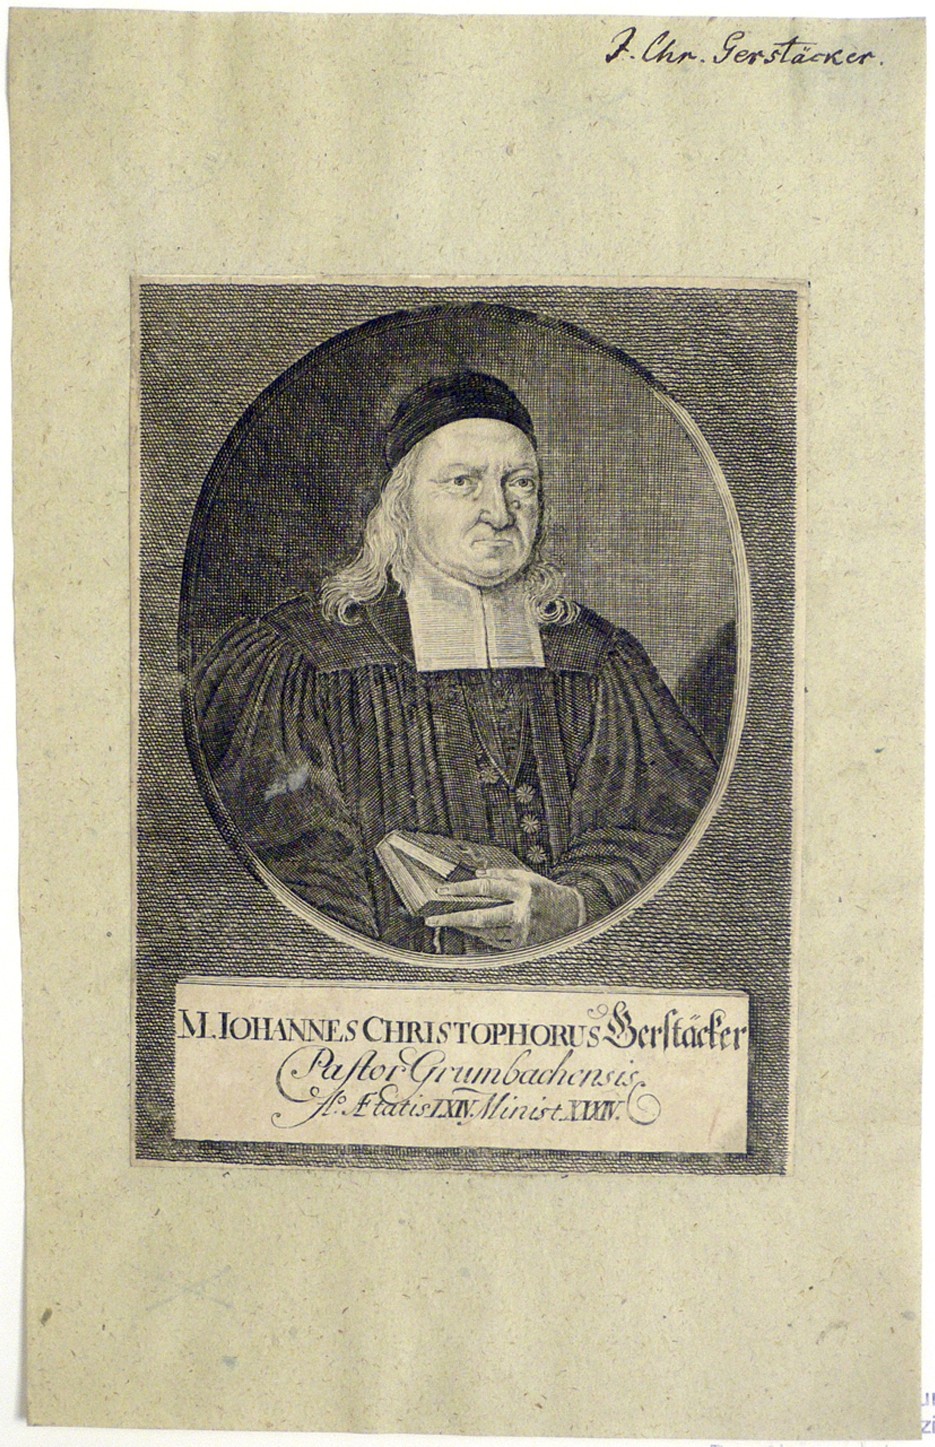 M. Iohannes Christophorus Gerstäcker ((C) Sammlung Bergischer Geschichtsverein e.V. CC BY-NC)